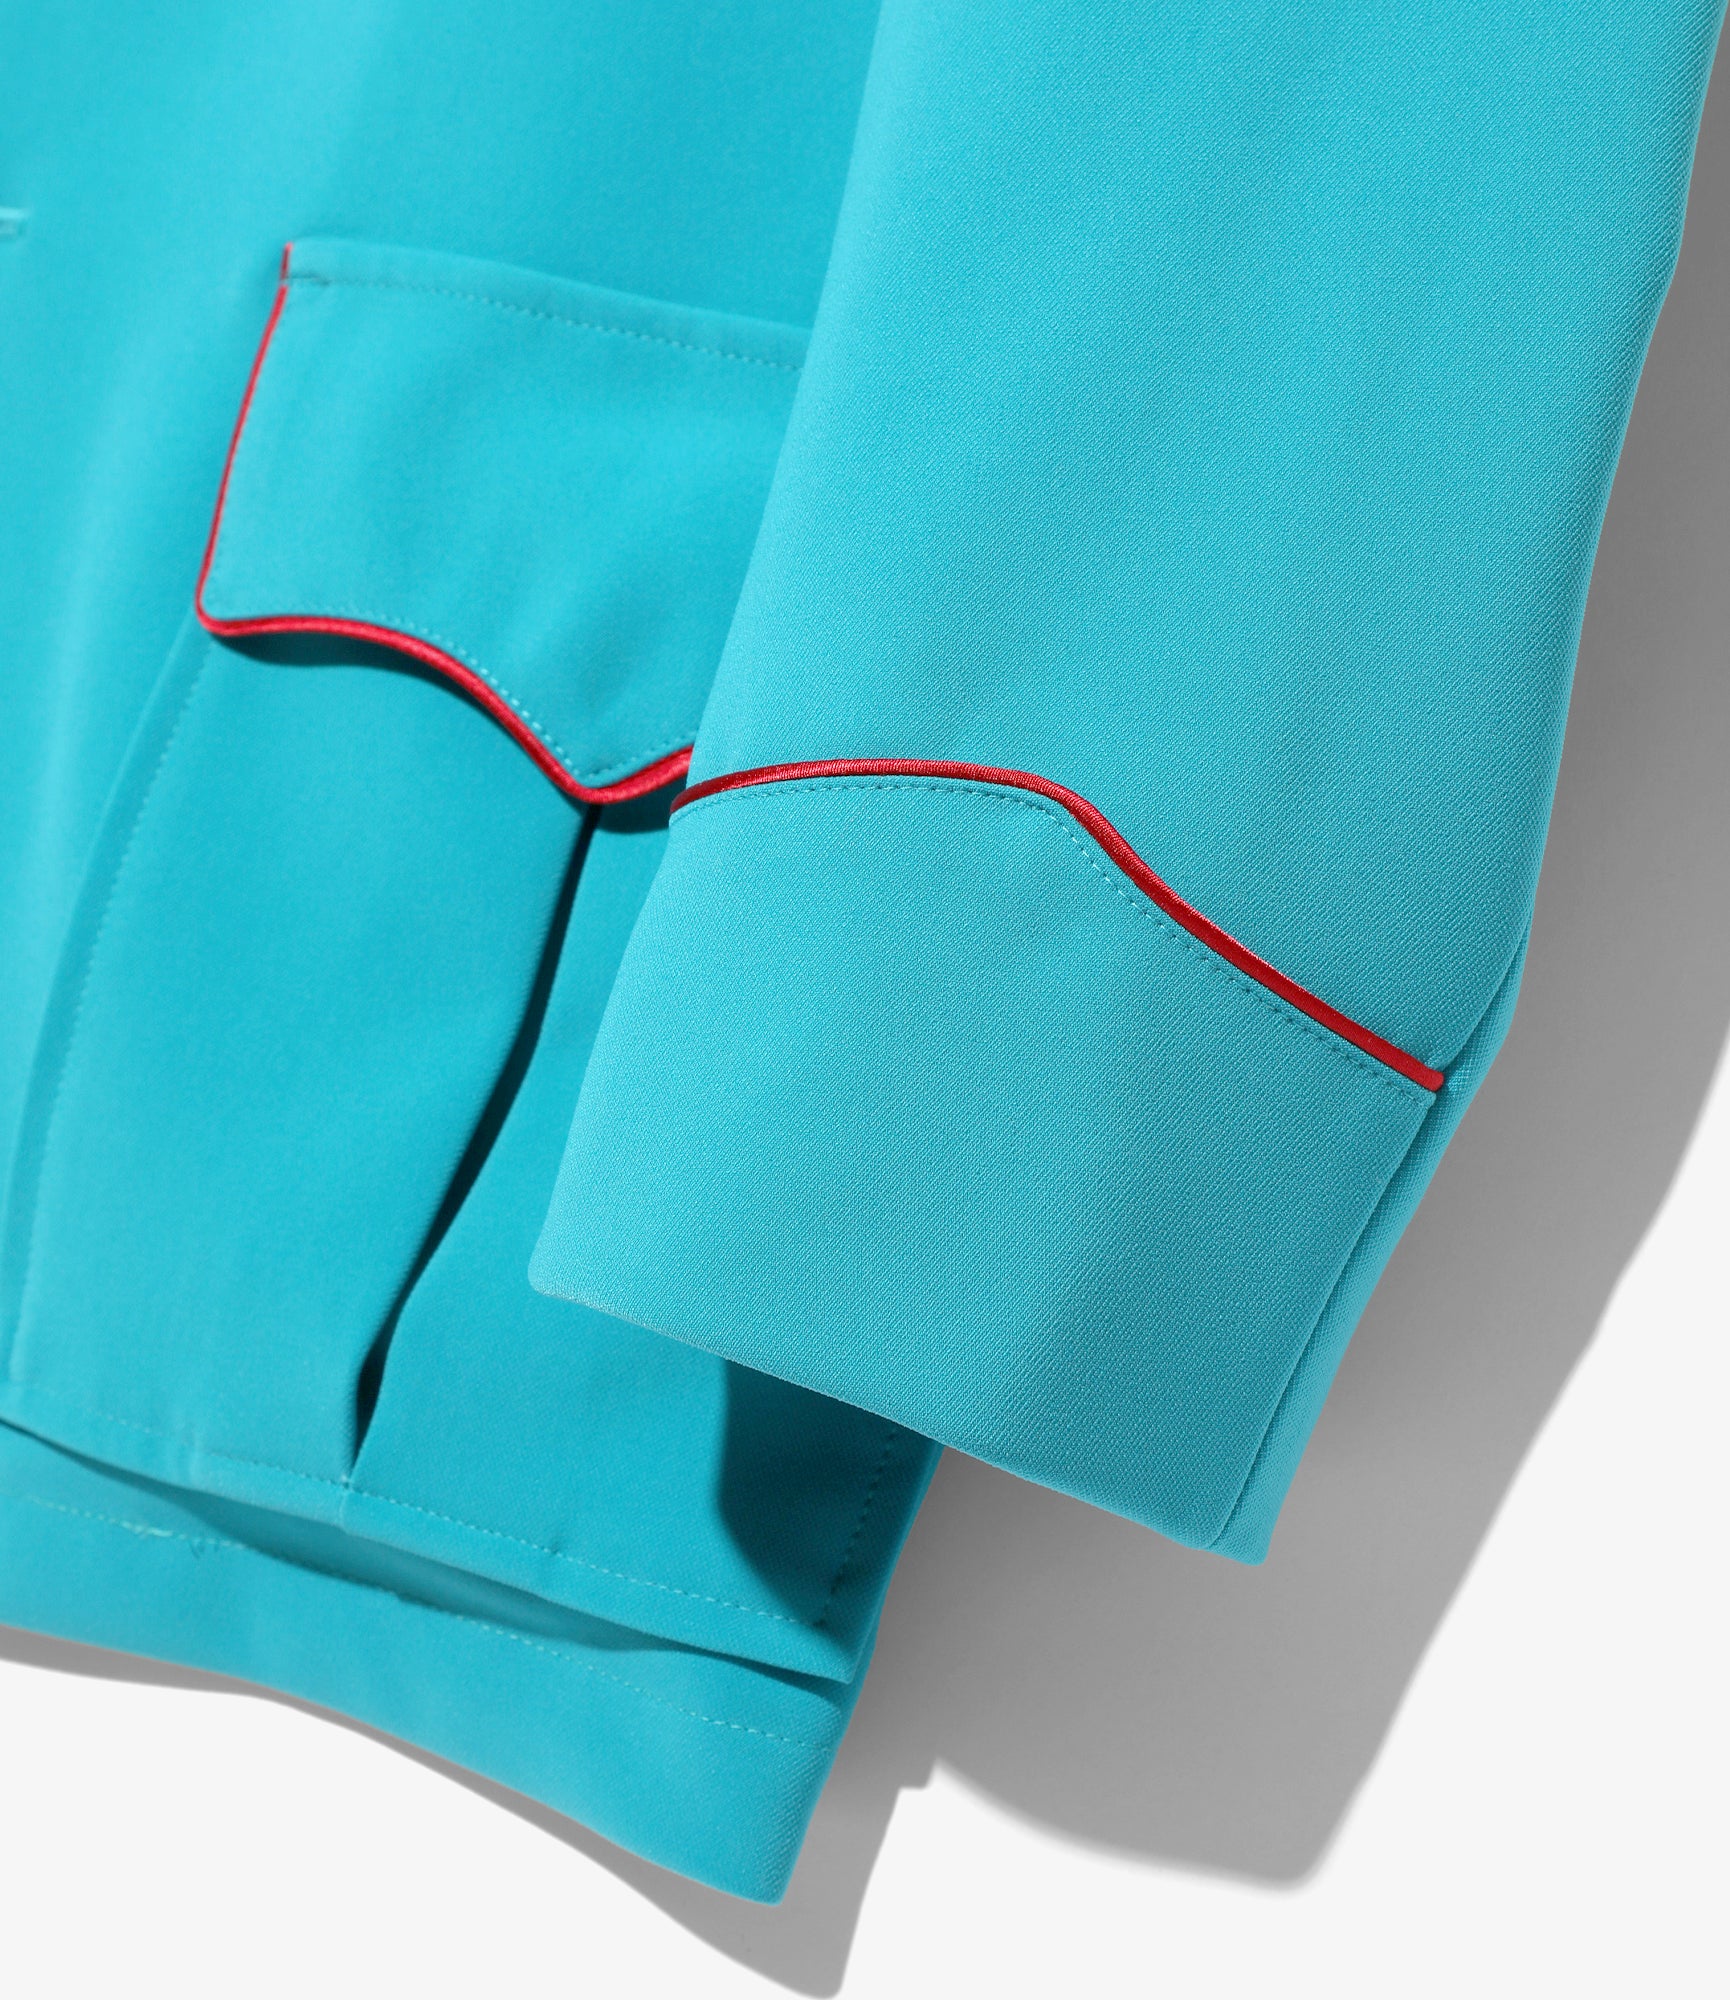 Western Leisure Jacket - Turquoise - PE/PU Double Cloth